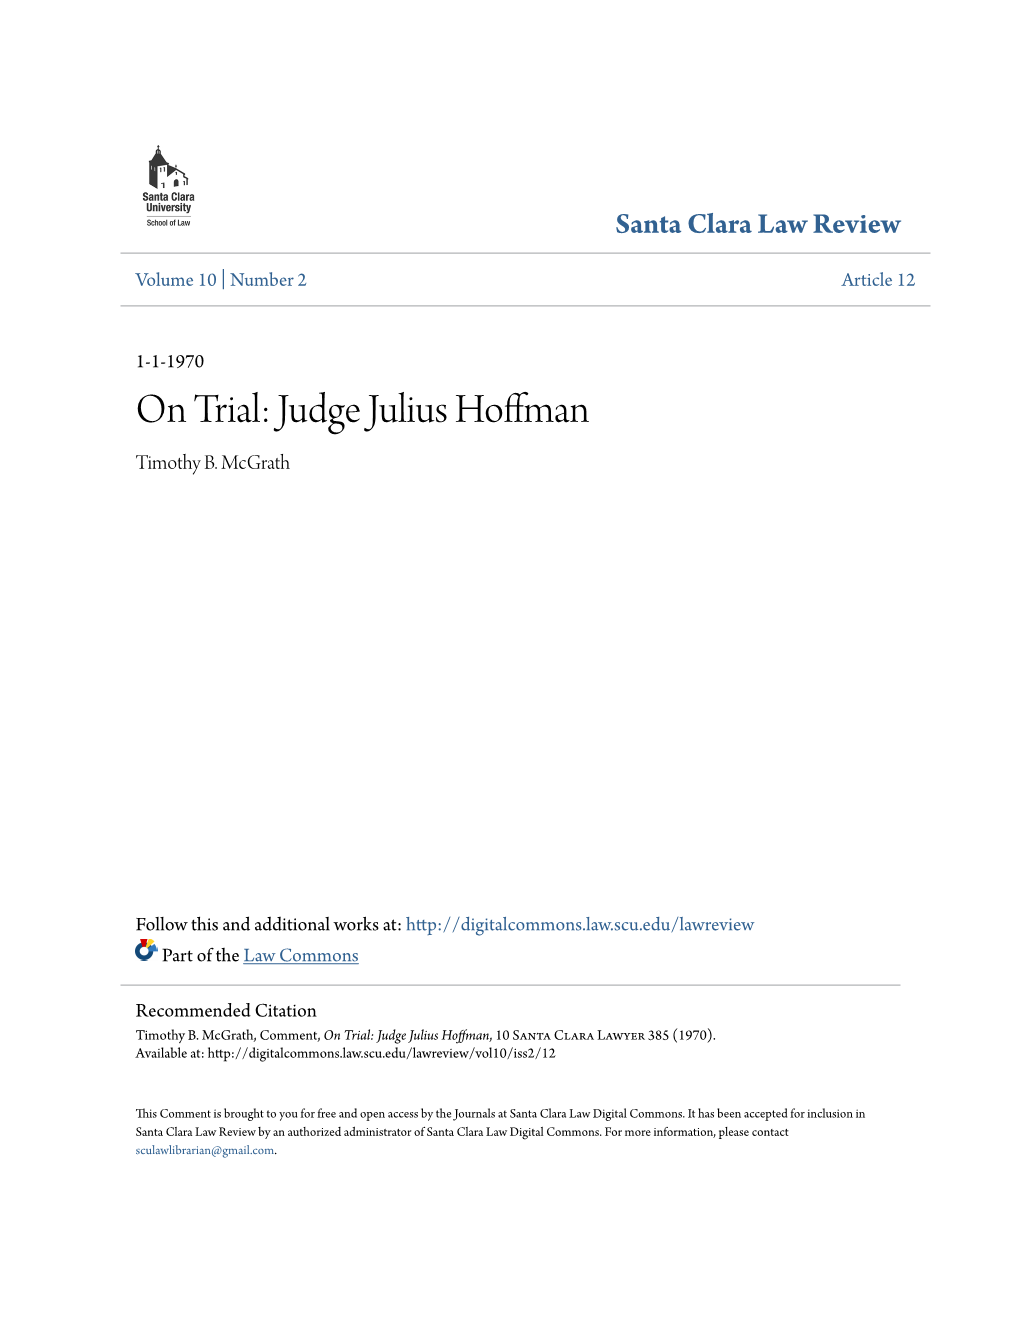 Judge Julius Hoffman Timothy B